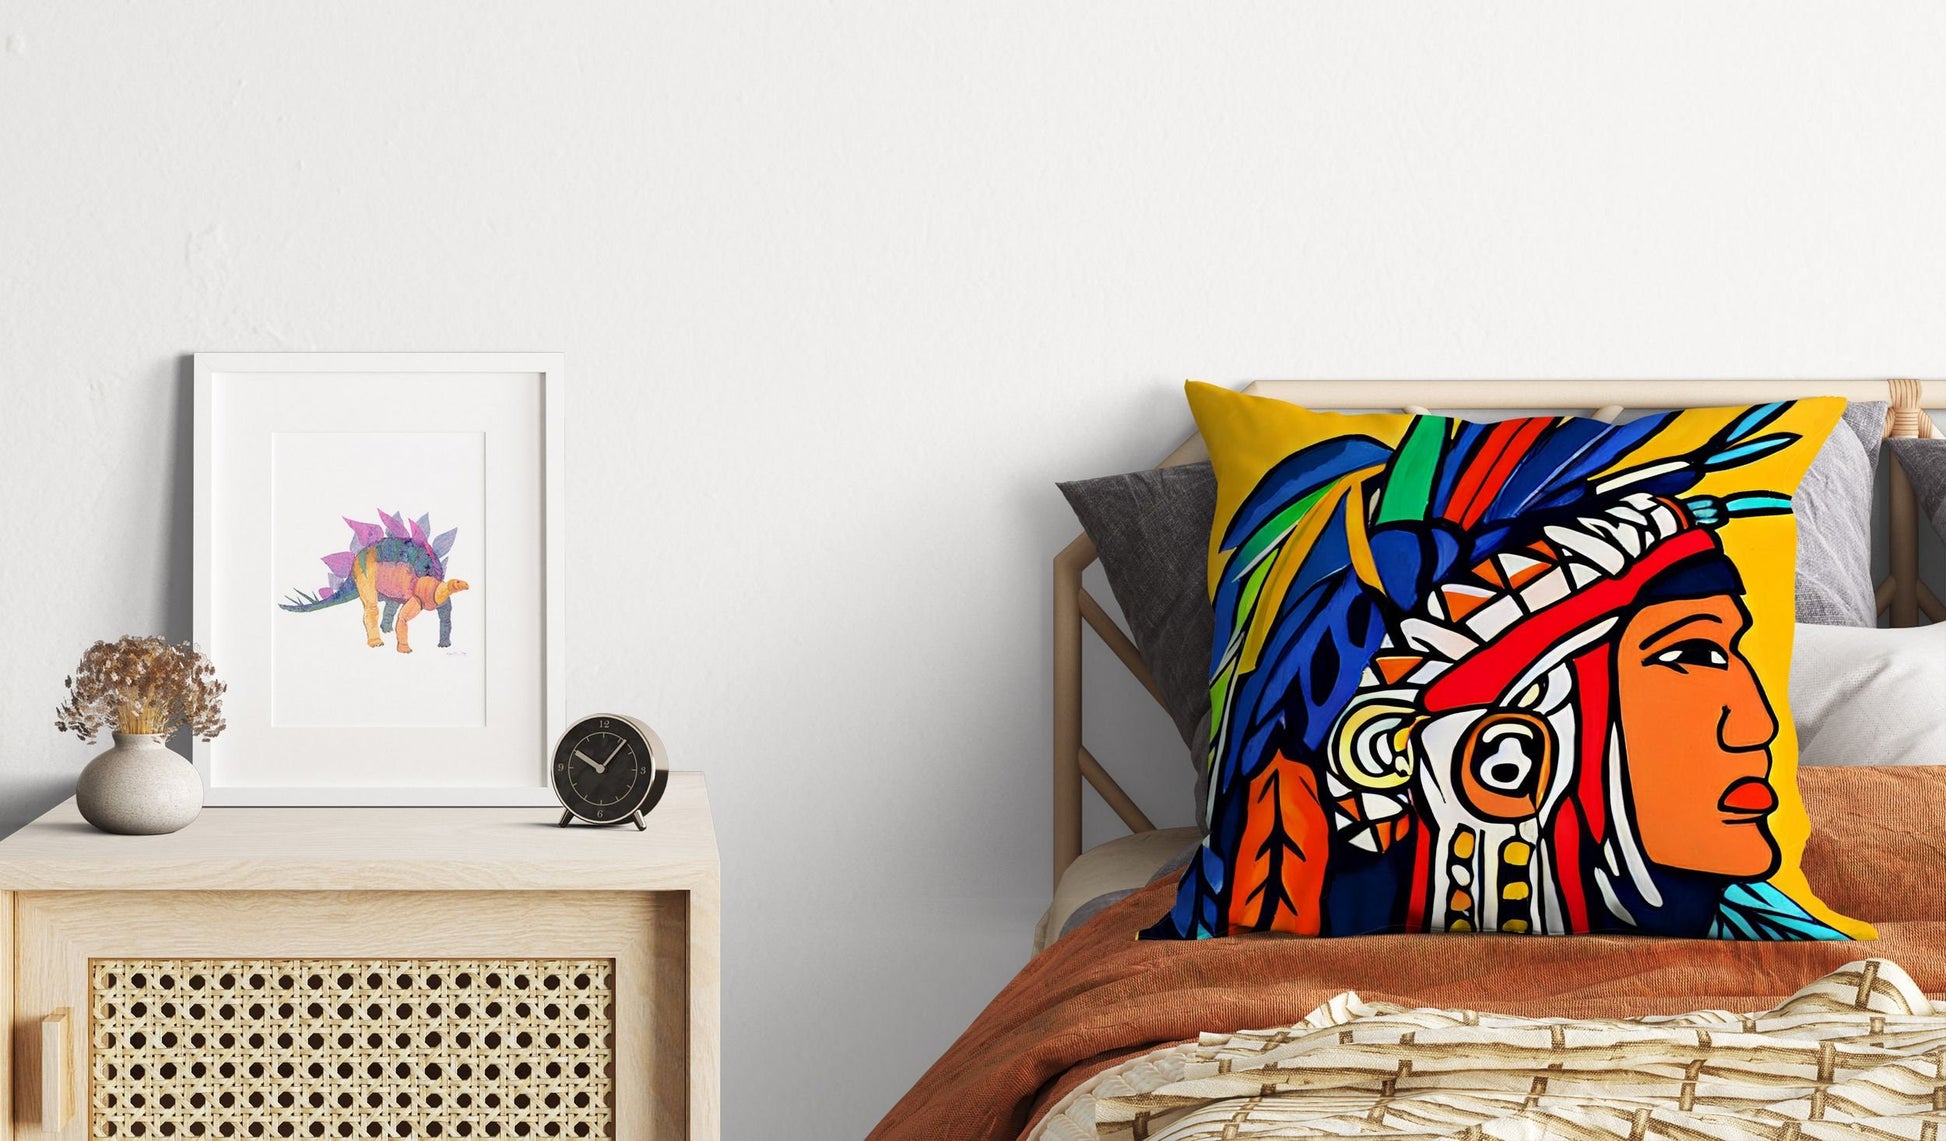 Indian Chief Pillow Case, Abstract Throw Pillow, Designer Pillow, Colorful Pillow Case, Contemporary Pillow, 24X24 Pillow Case